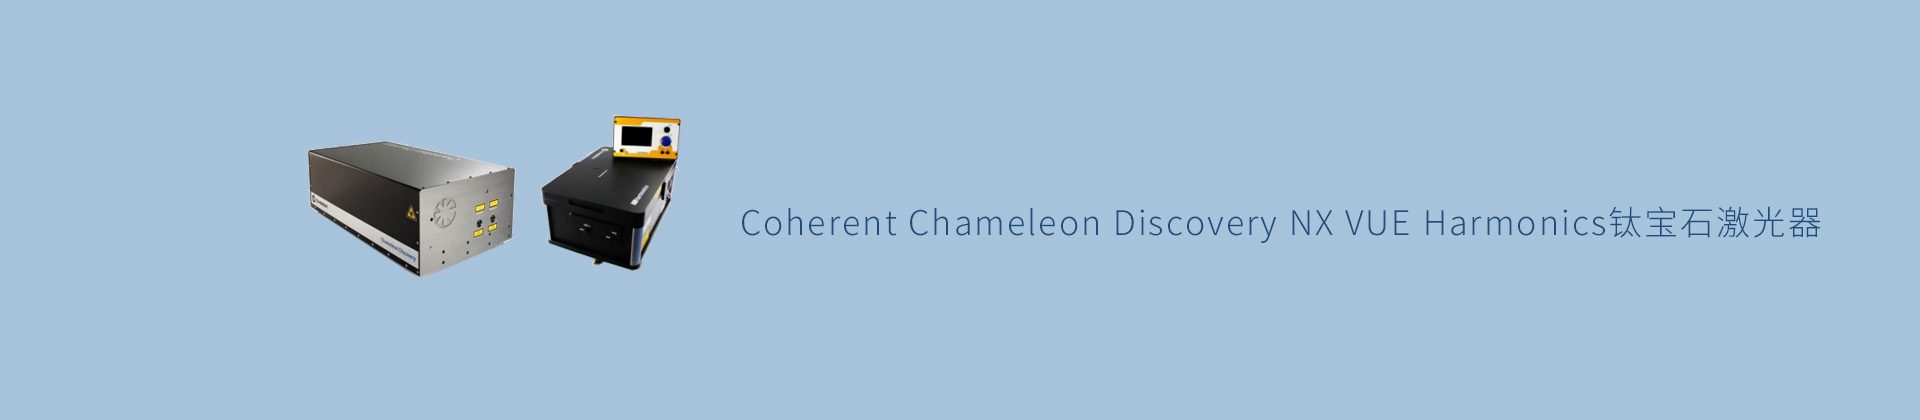 Coherent Chameleon Discovery NX VUE Harmonics钛宝石激光器